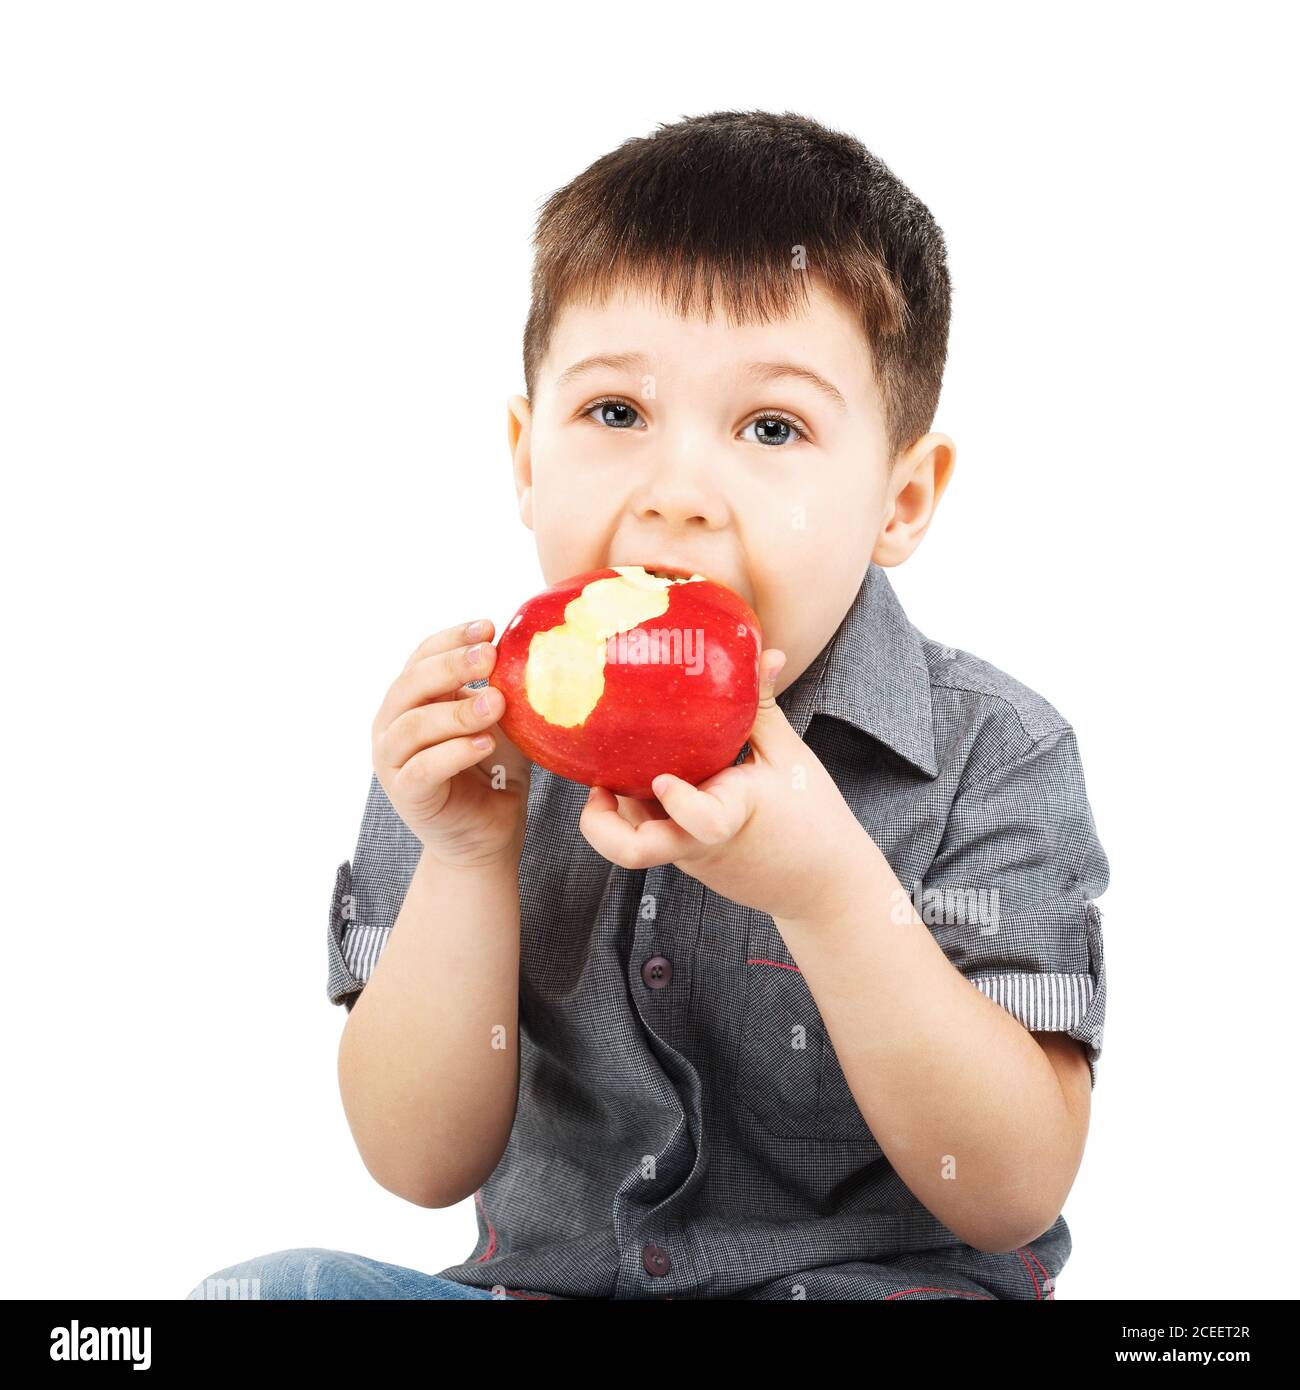 The apple am little. Мальчик ест яблоко. Ребенок ест яблоко. Мальчик с яблоком. Мальчик ест фрукты.